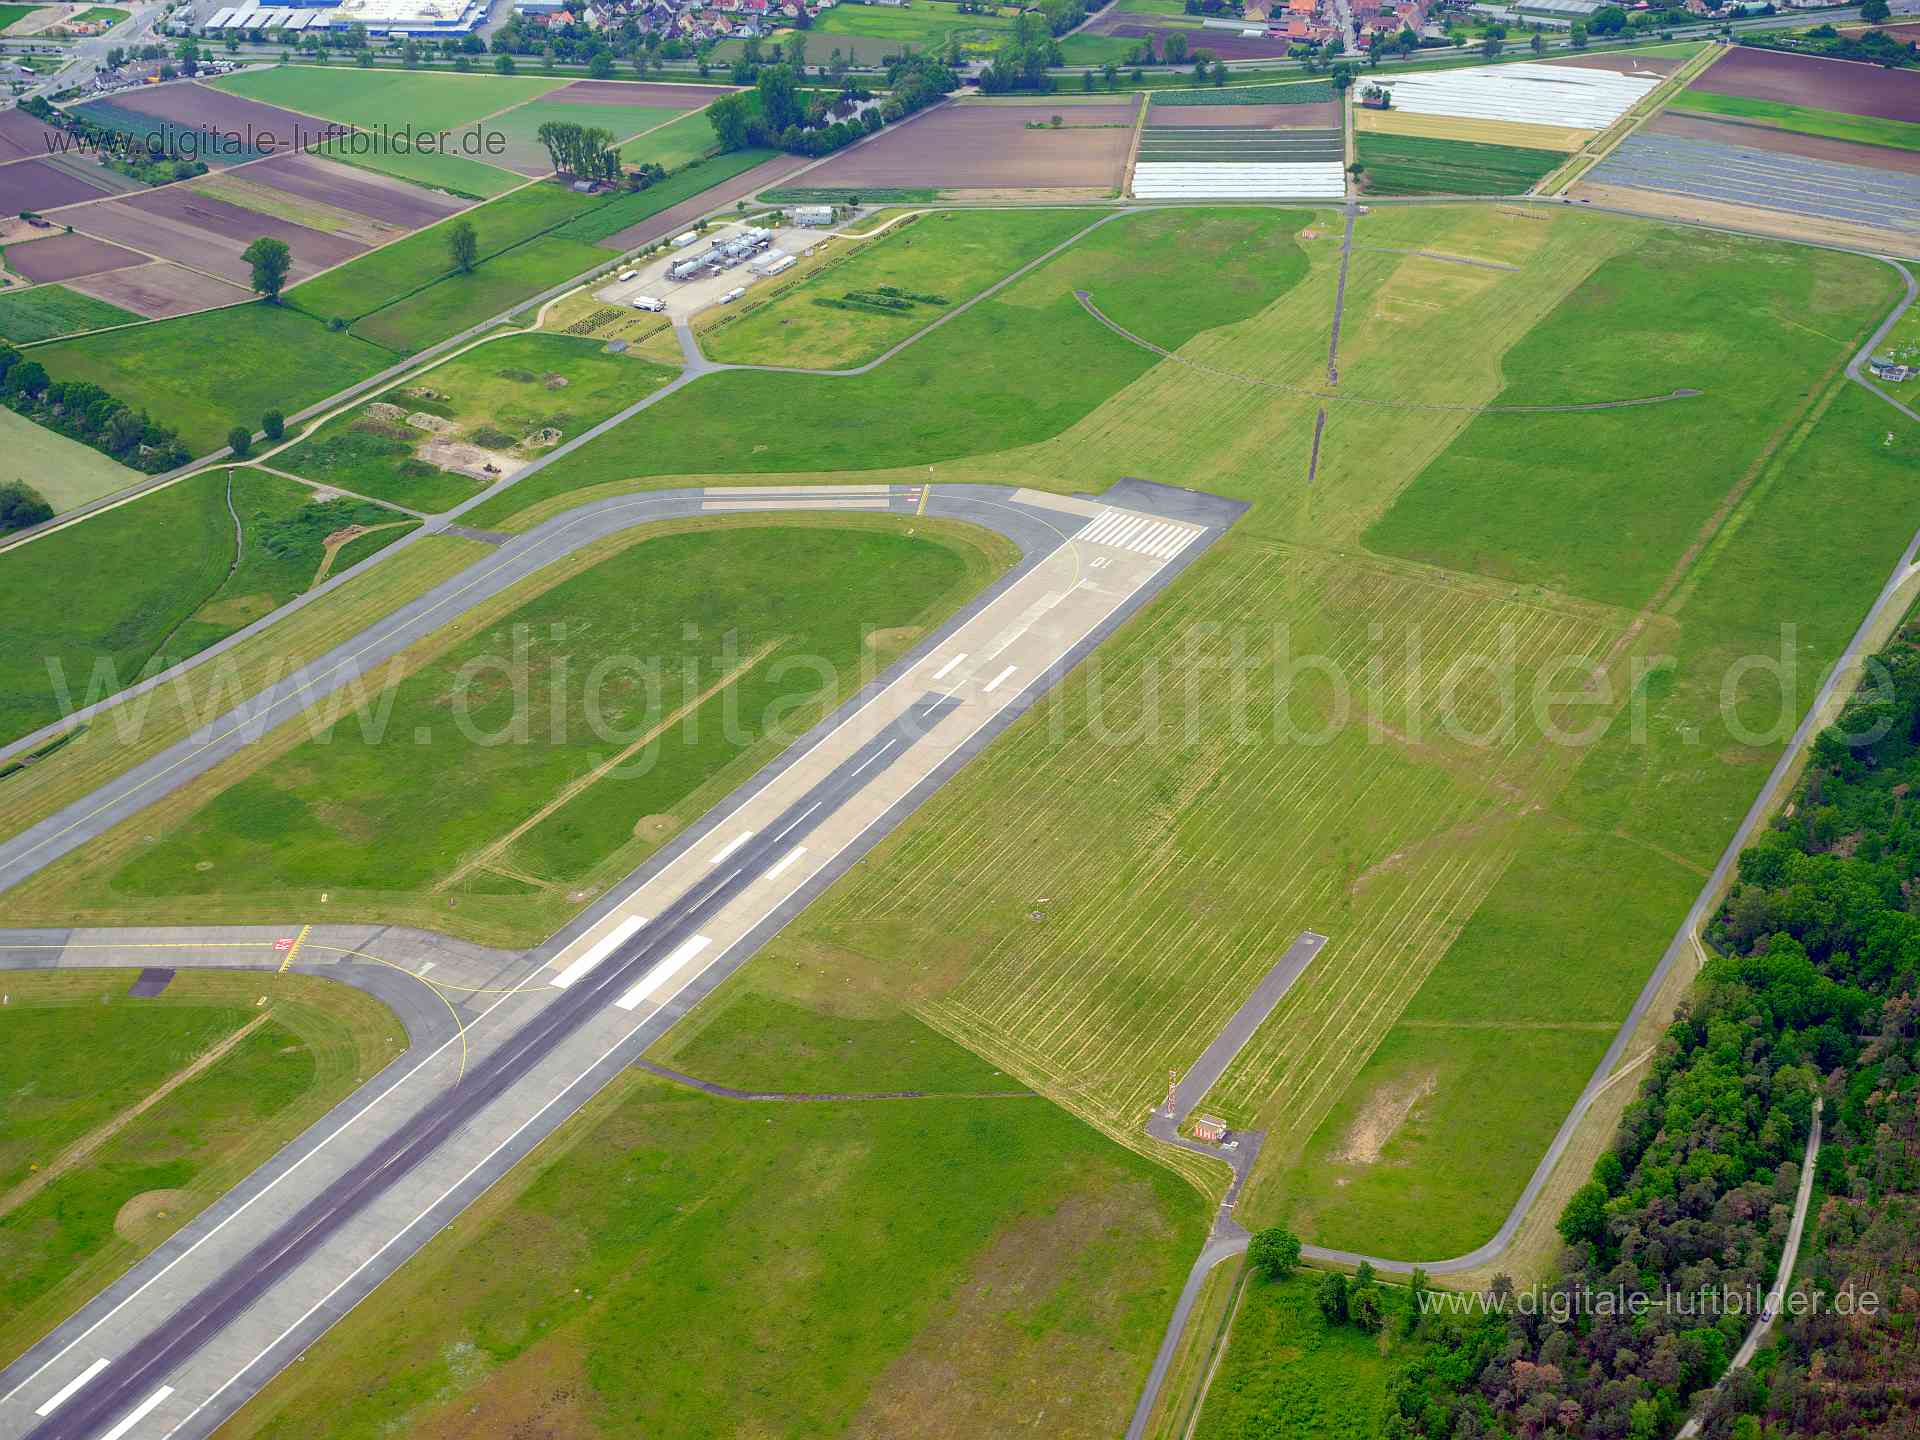 Luftbild - Albrecht-Dürer-Airport, Ort: Nürnberg, Tags: Albrecht-Dürer-Airport, Landebahn, Startbahn, Rollfeld, Irrhainstr...